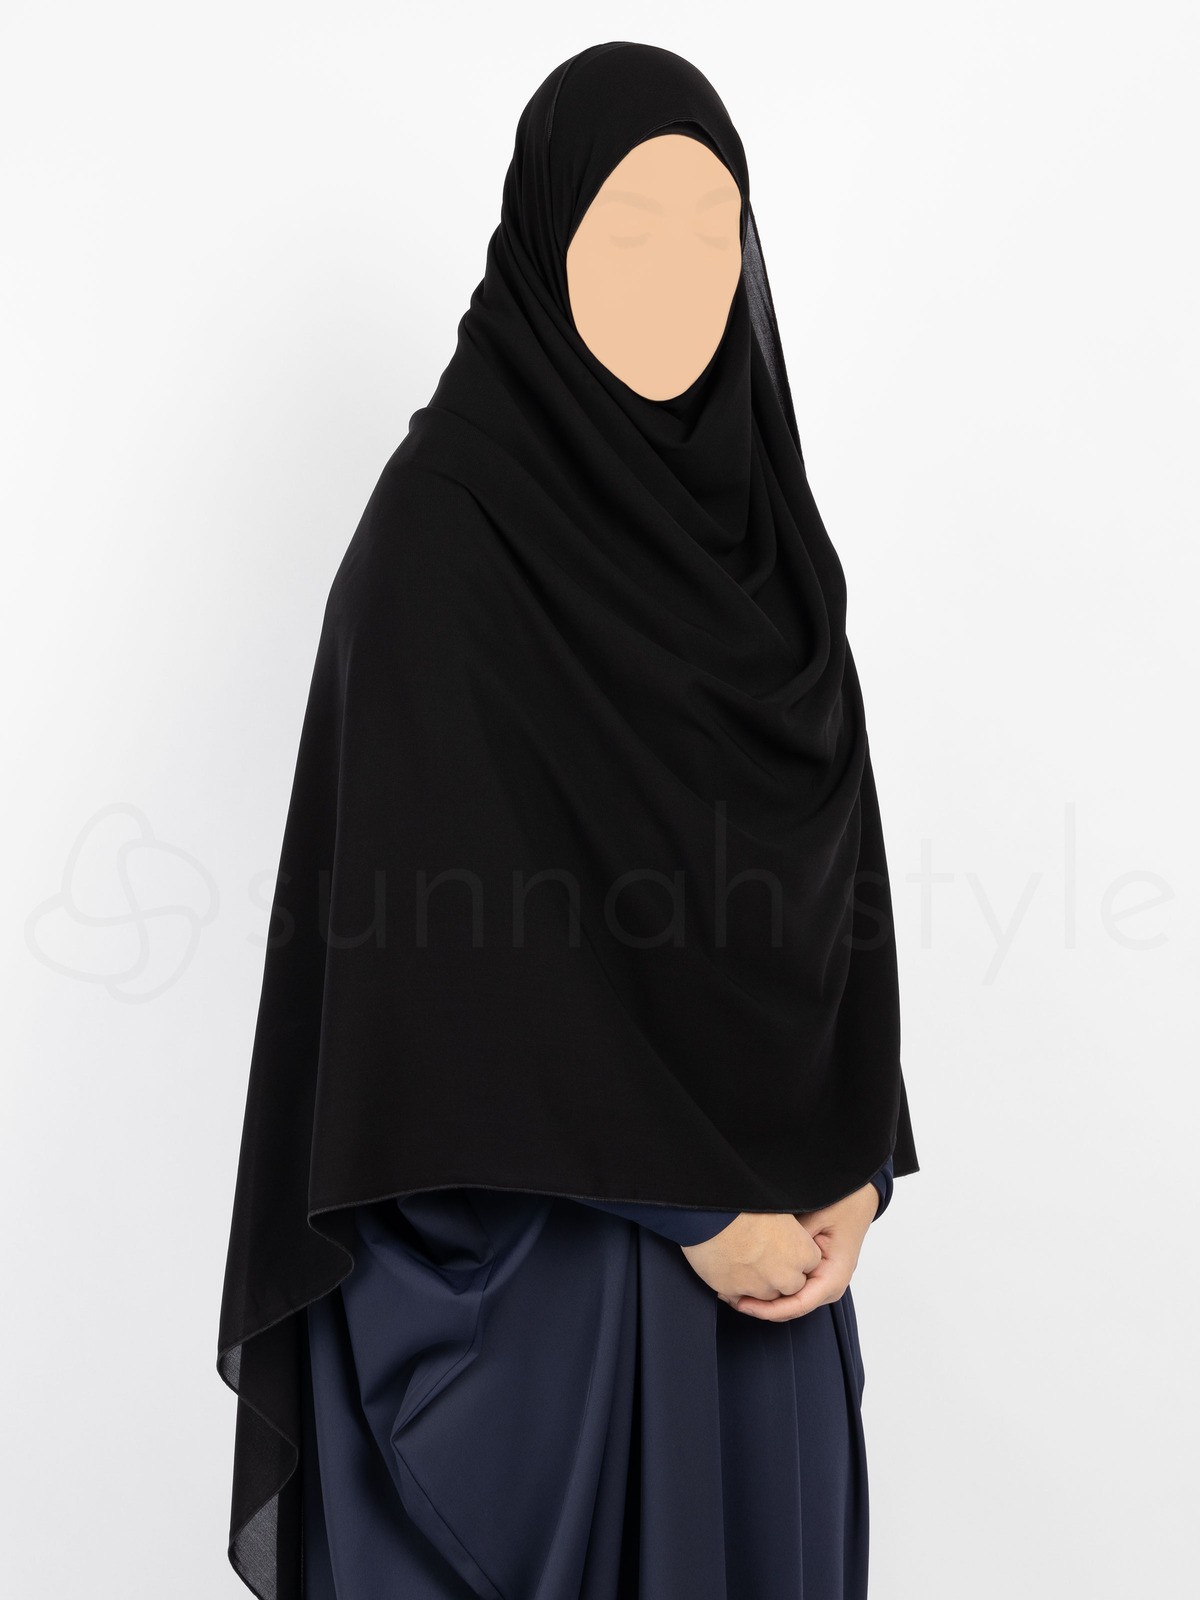 Sunnah Style - Essentials Shayla (Premium Chiffon) - XL (Black)